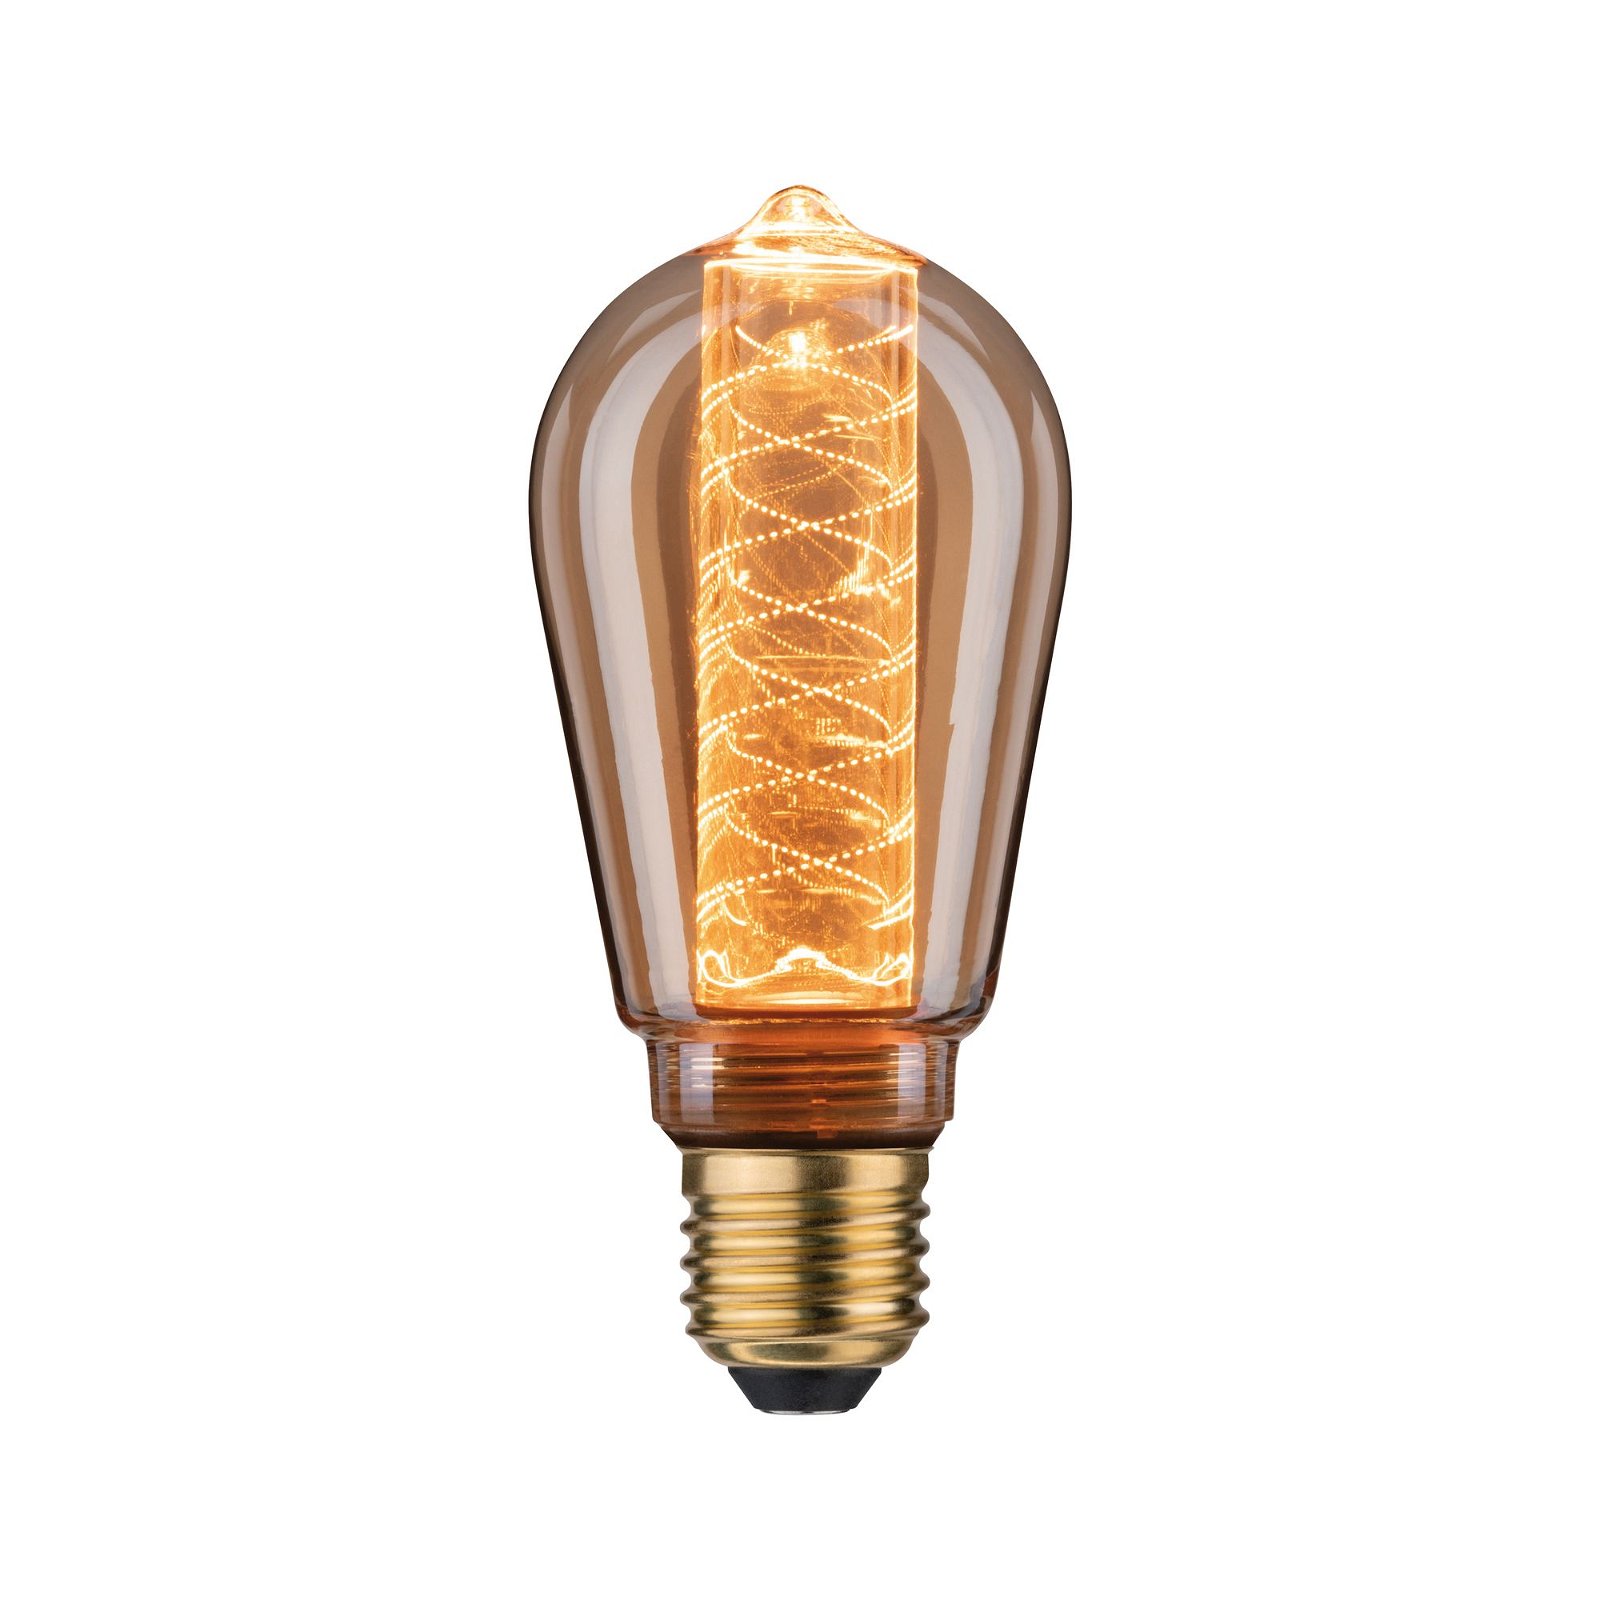 Inner Glow Edition LED-kolf Binnenkolf spiraalpatroon E27 230V 120lm 3,6W 1800K dimbaar Goud